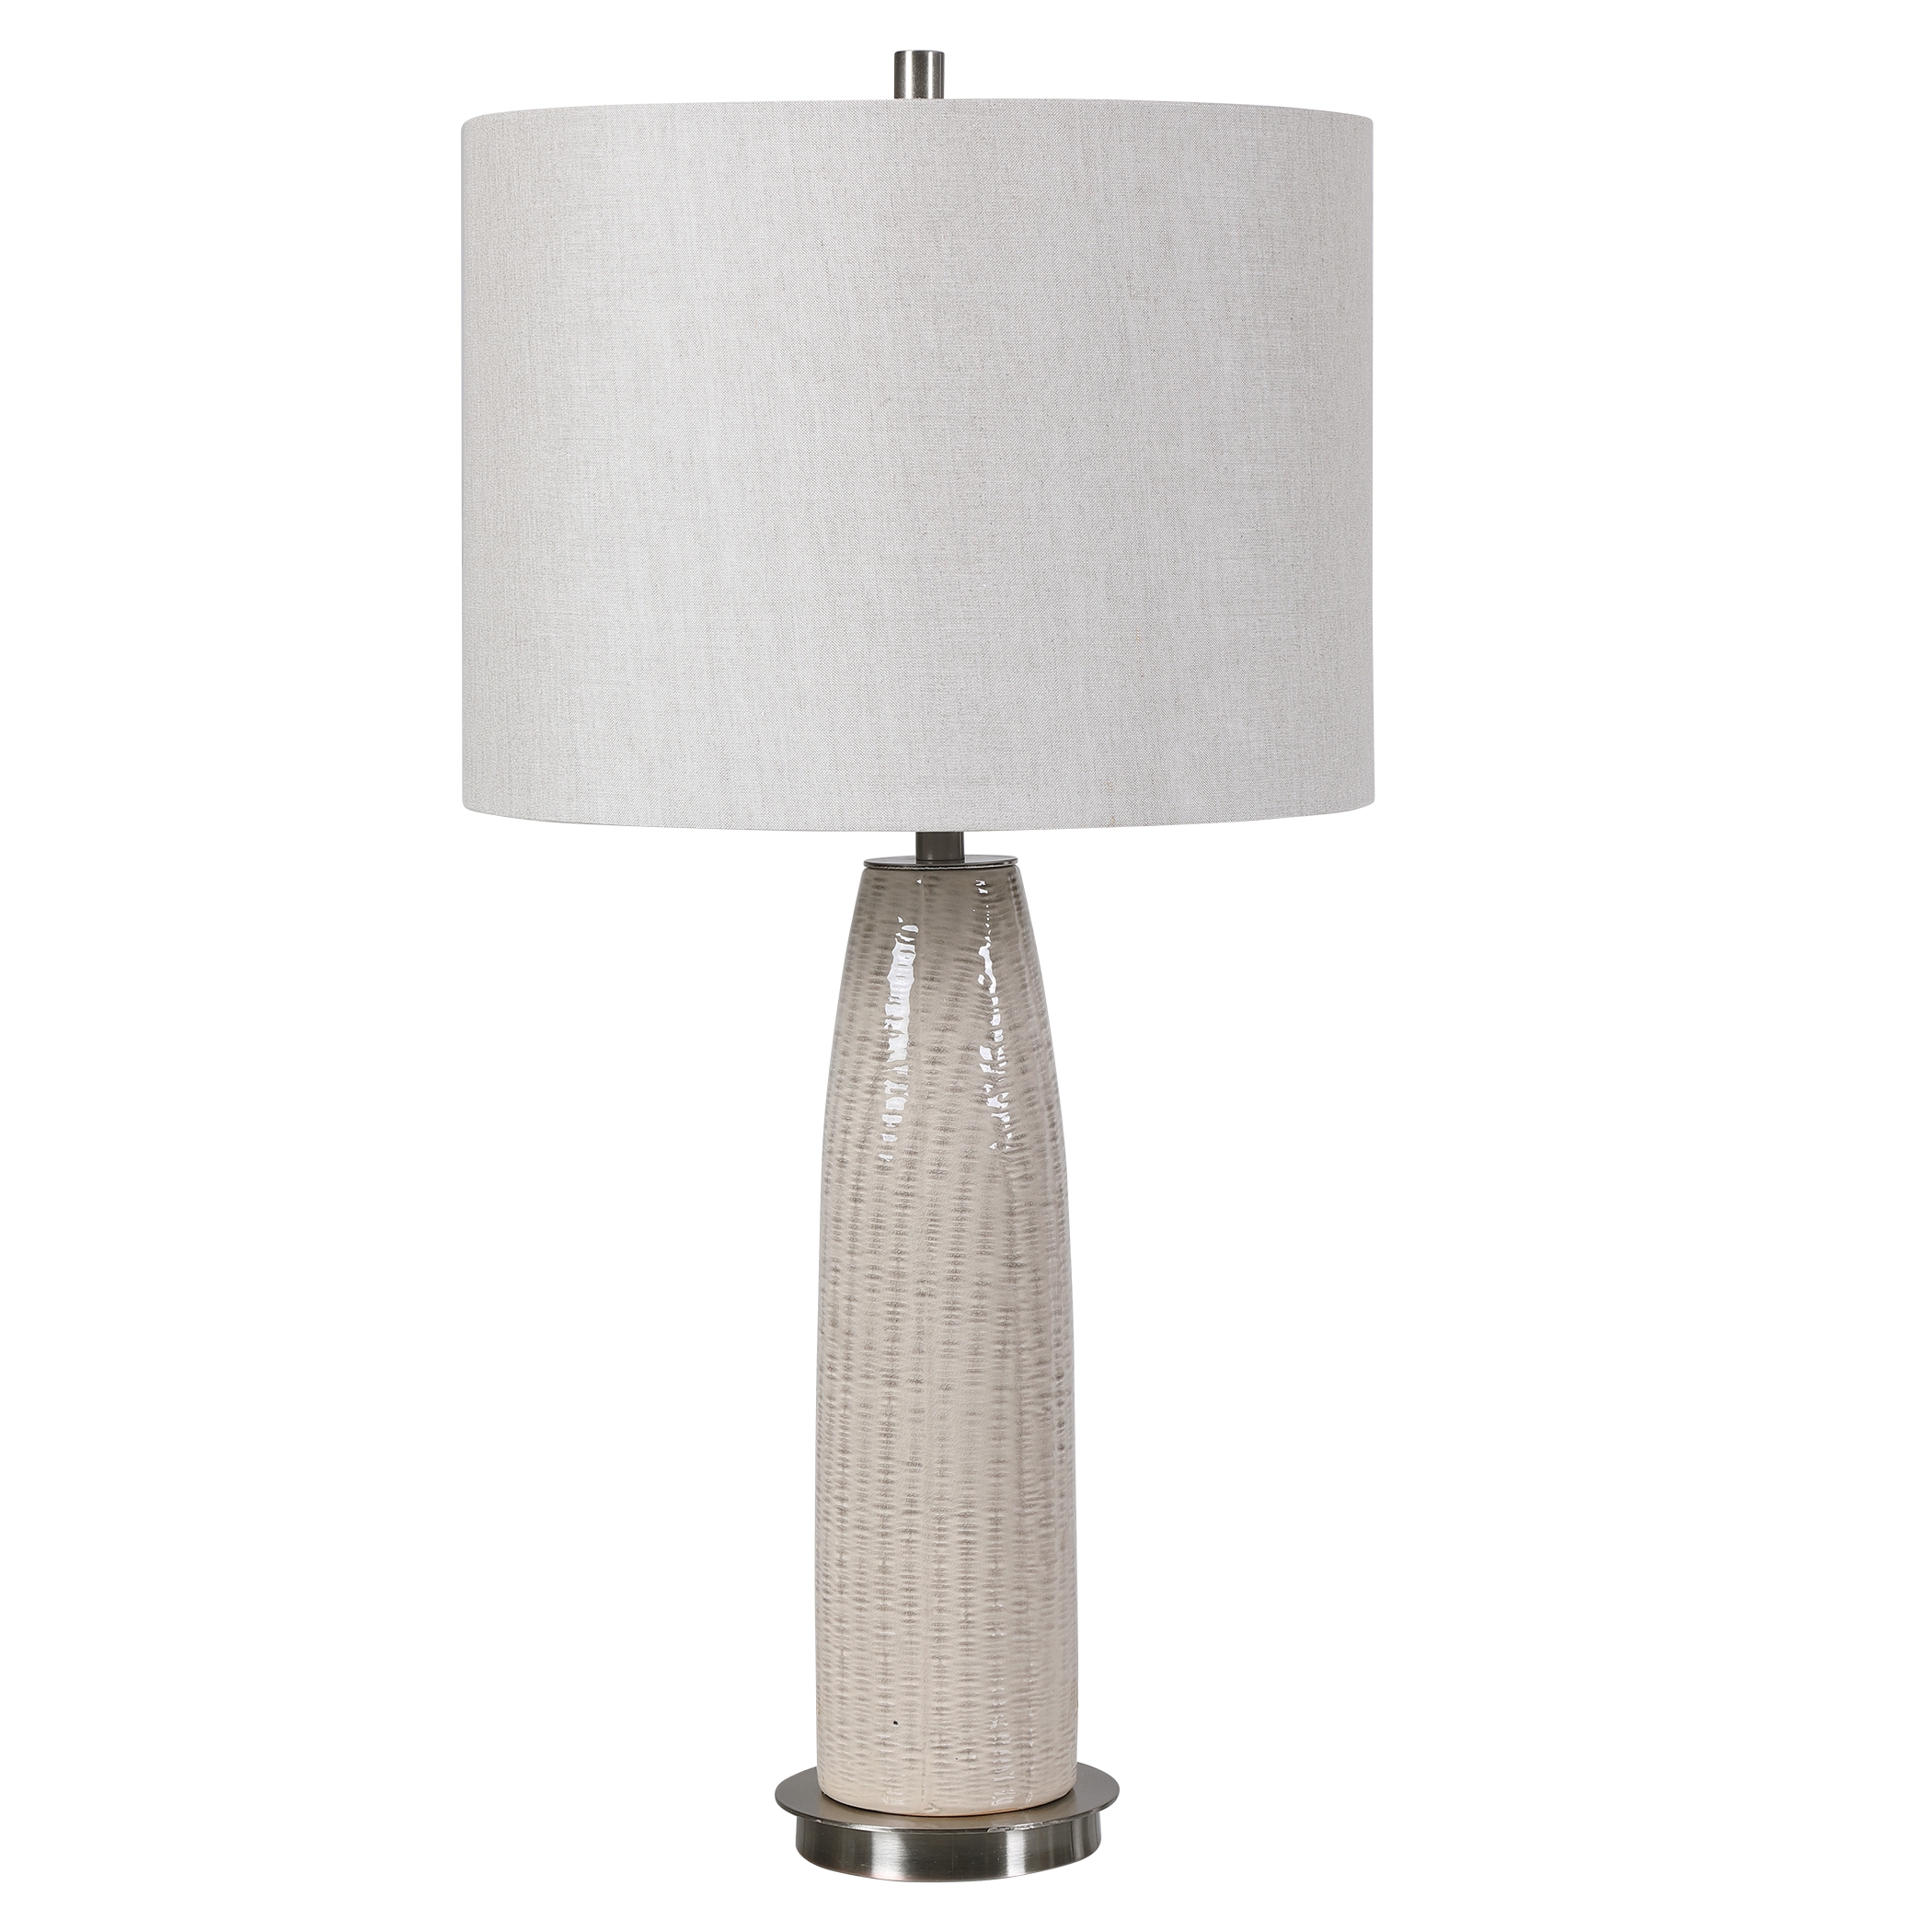 Delgado Light Gray Table Lamp - Image 2